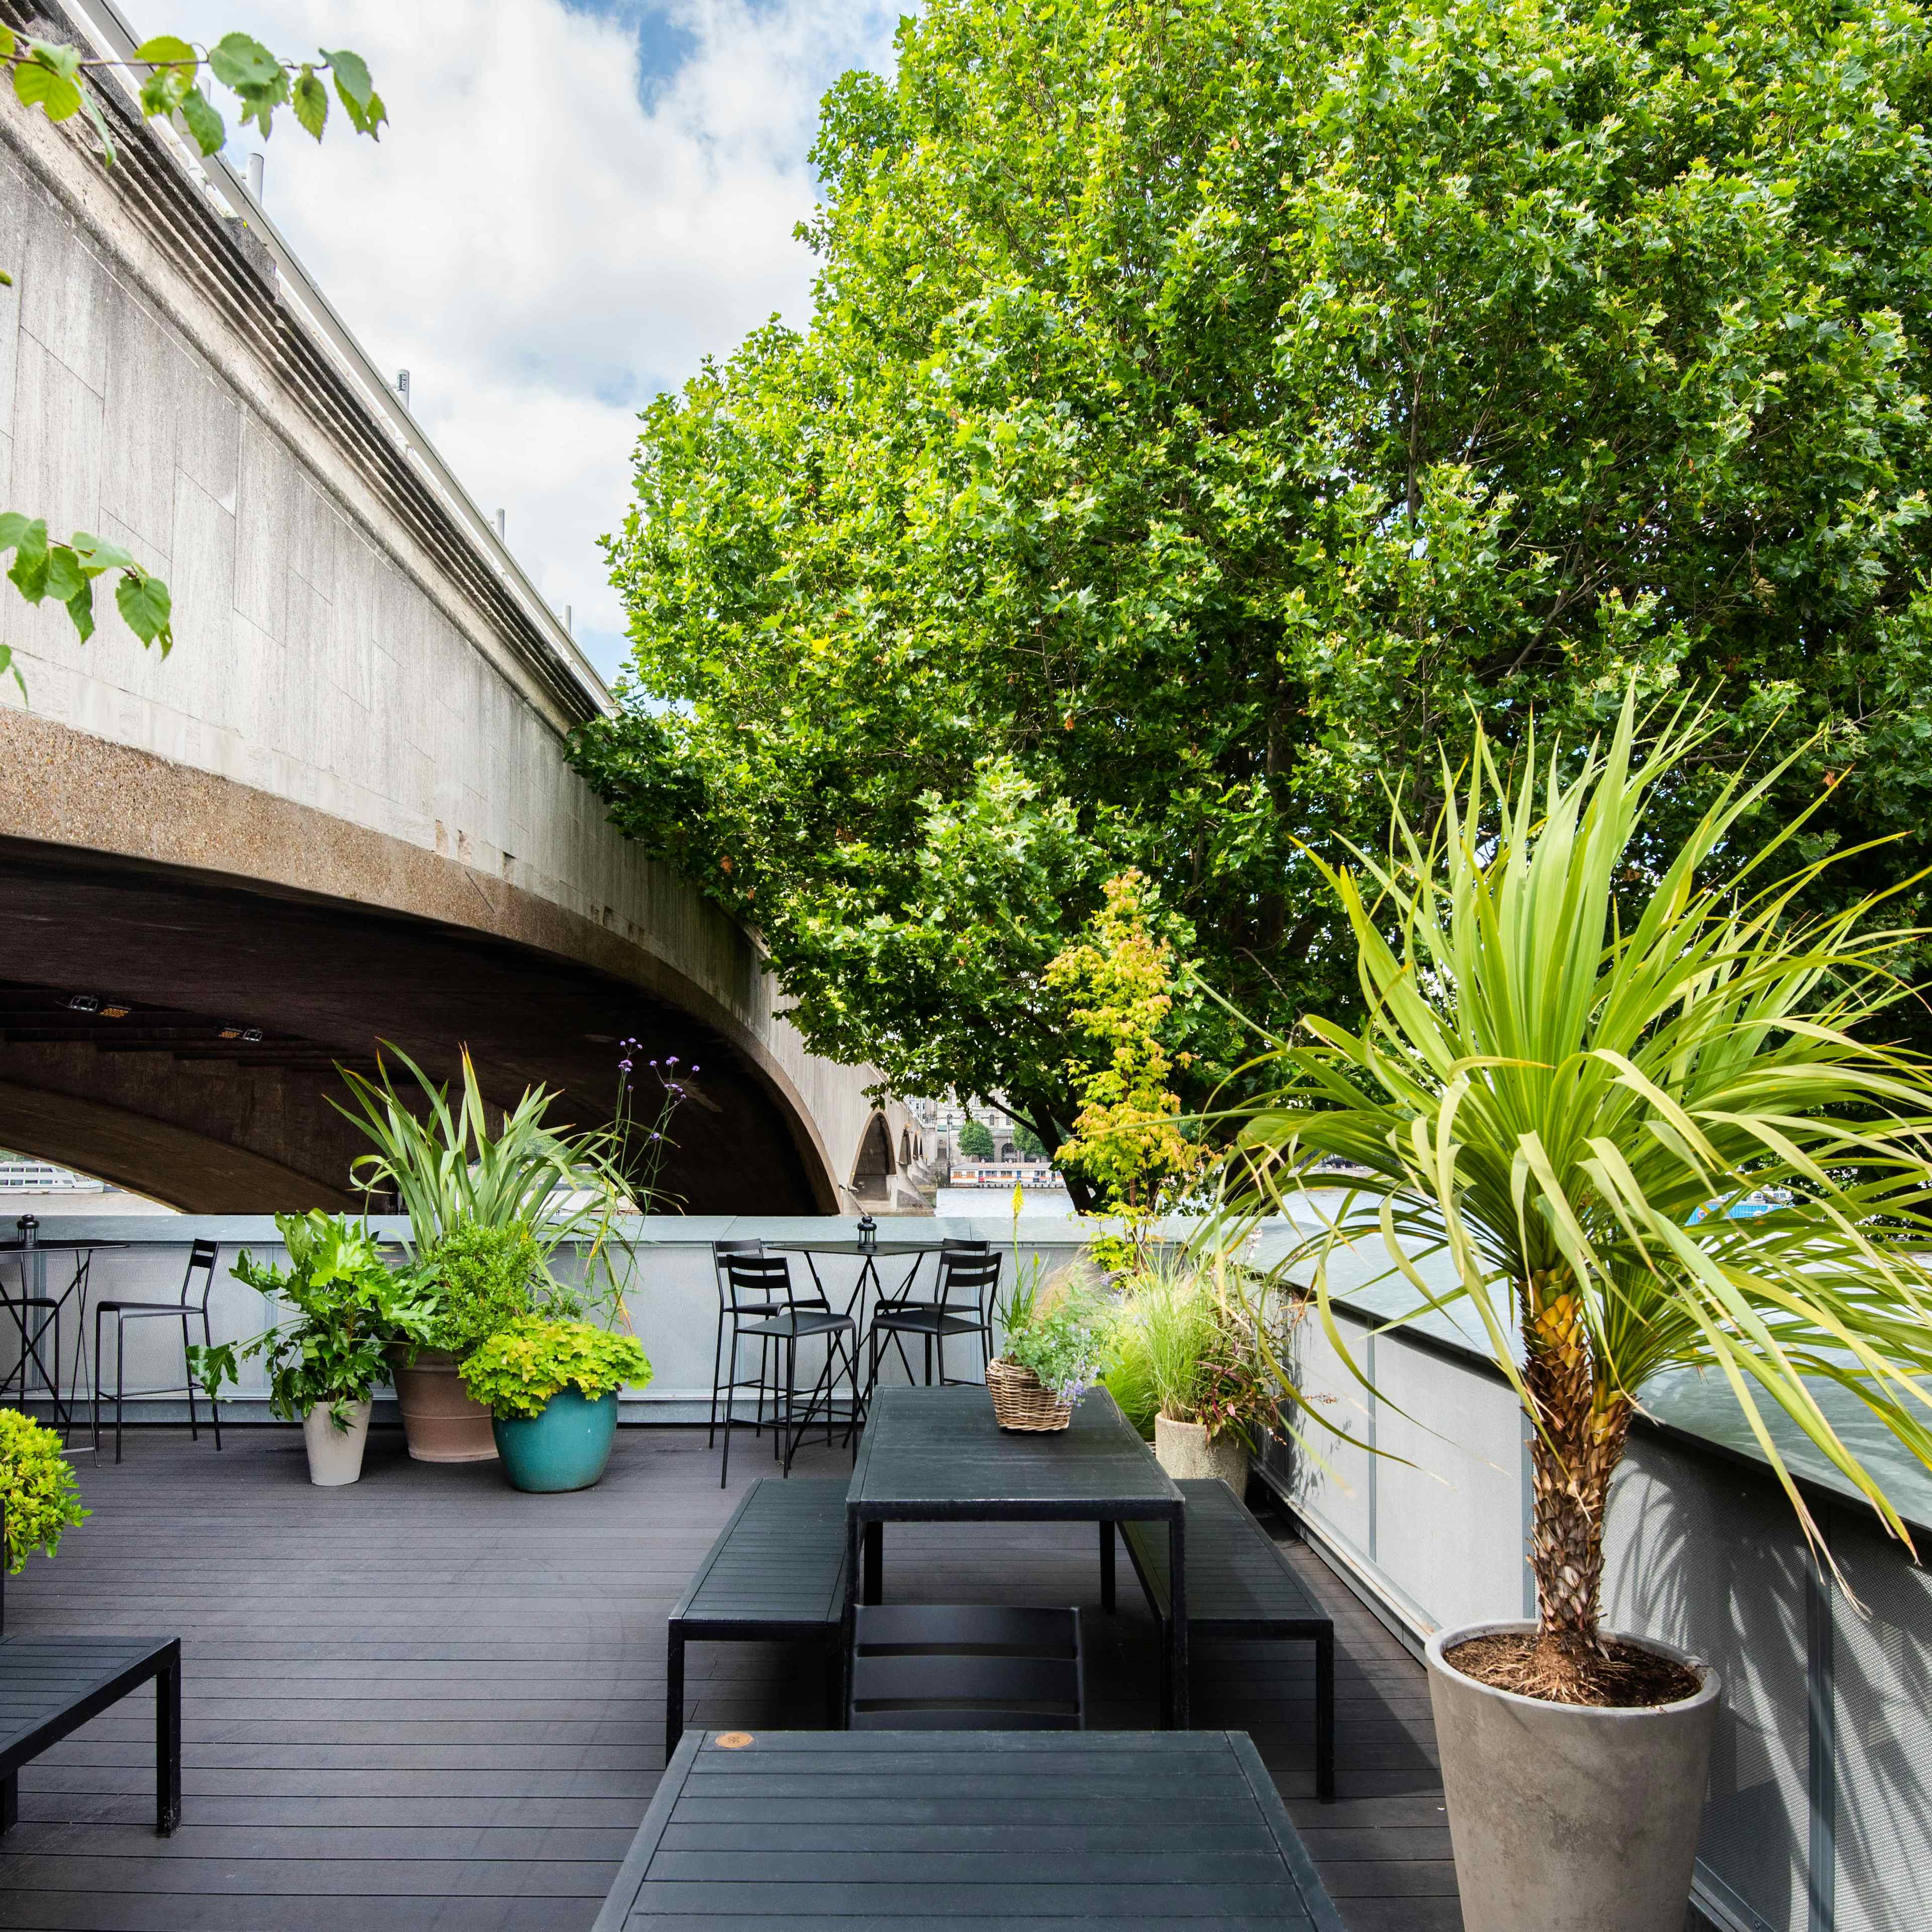 The Riverfront Terrace - Balcony Bar image 2